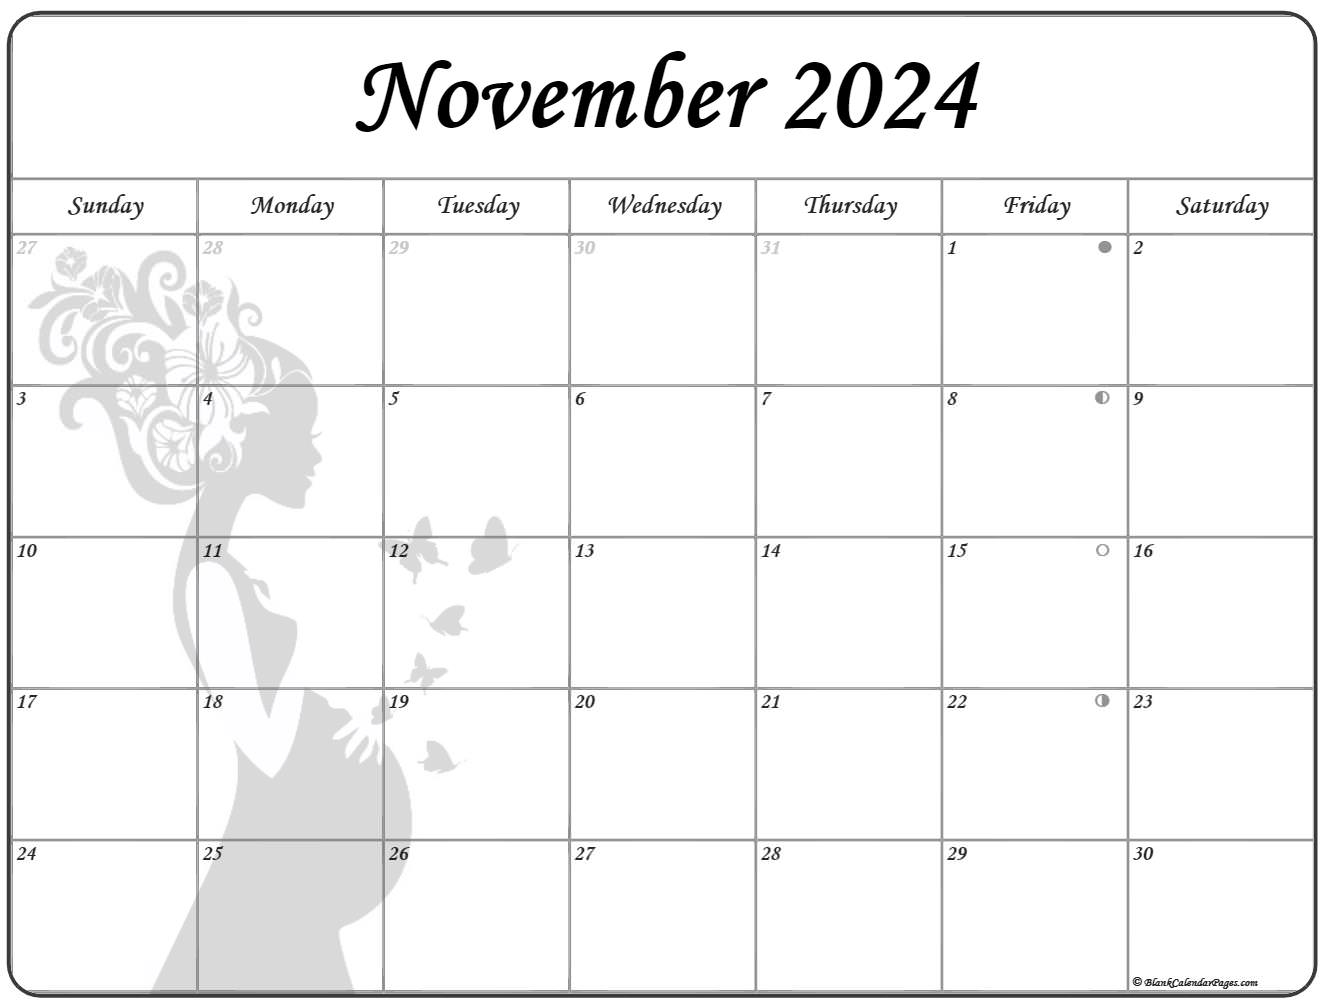 November 2021 Pregnancy Calendar | Fertility Calendar